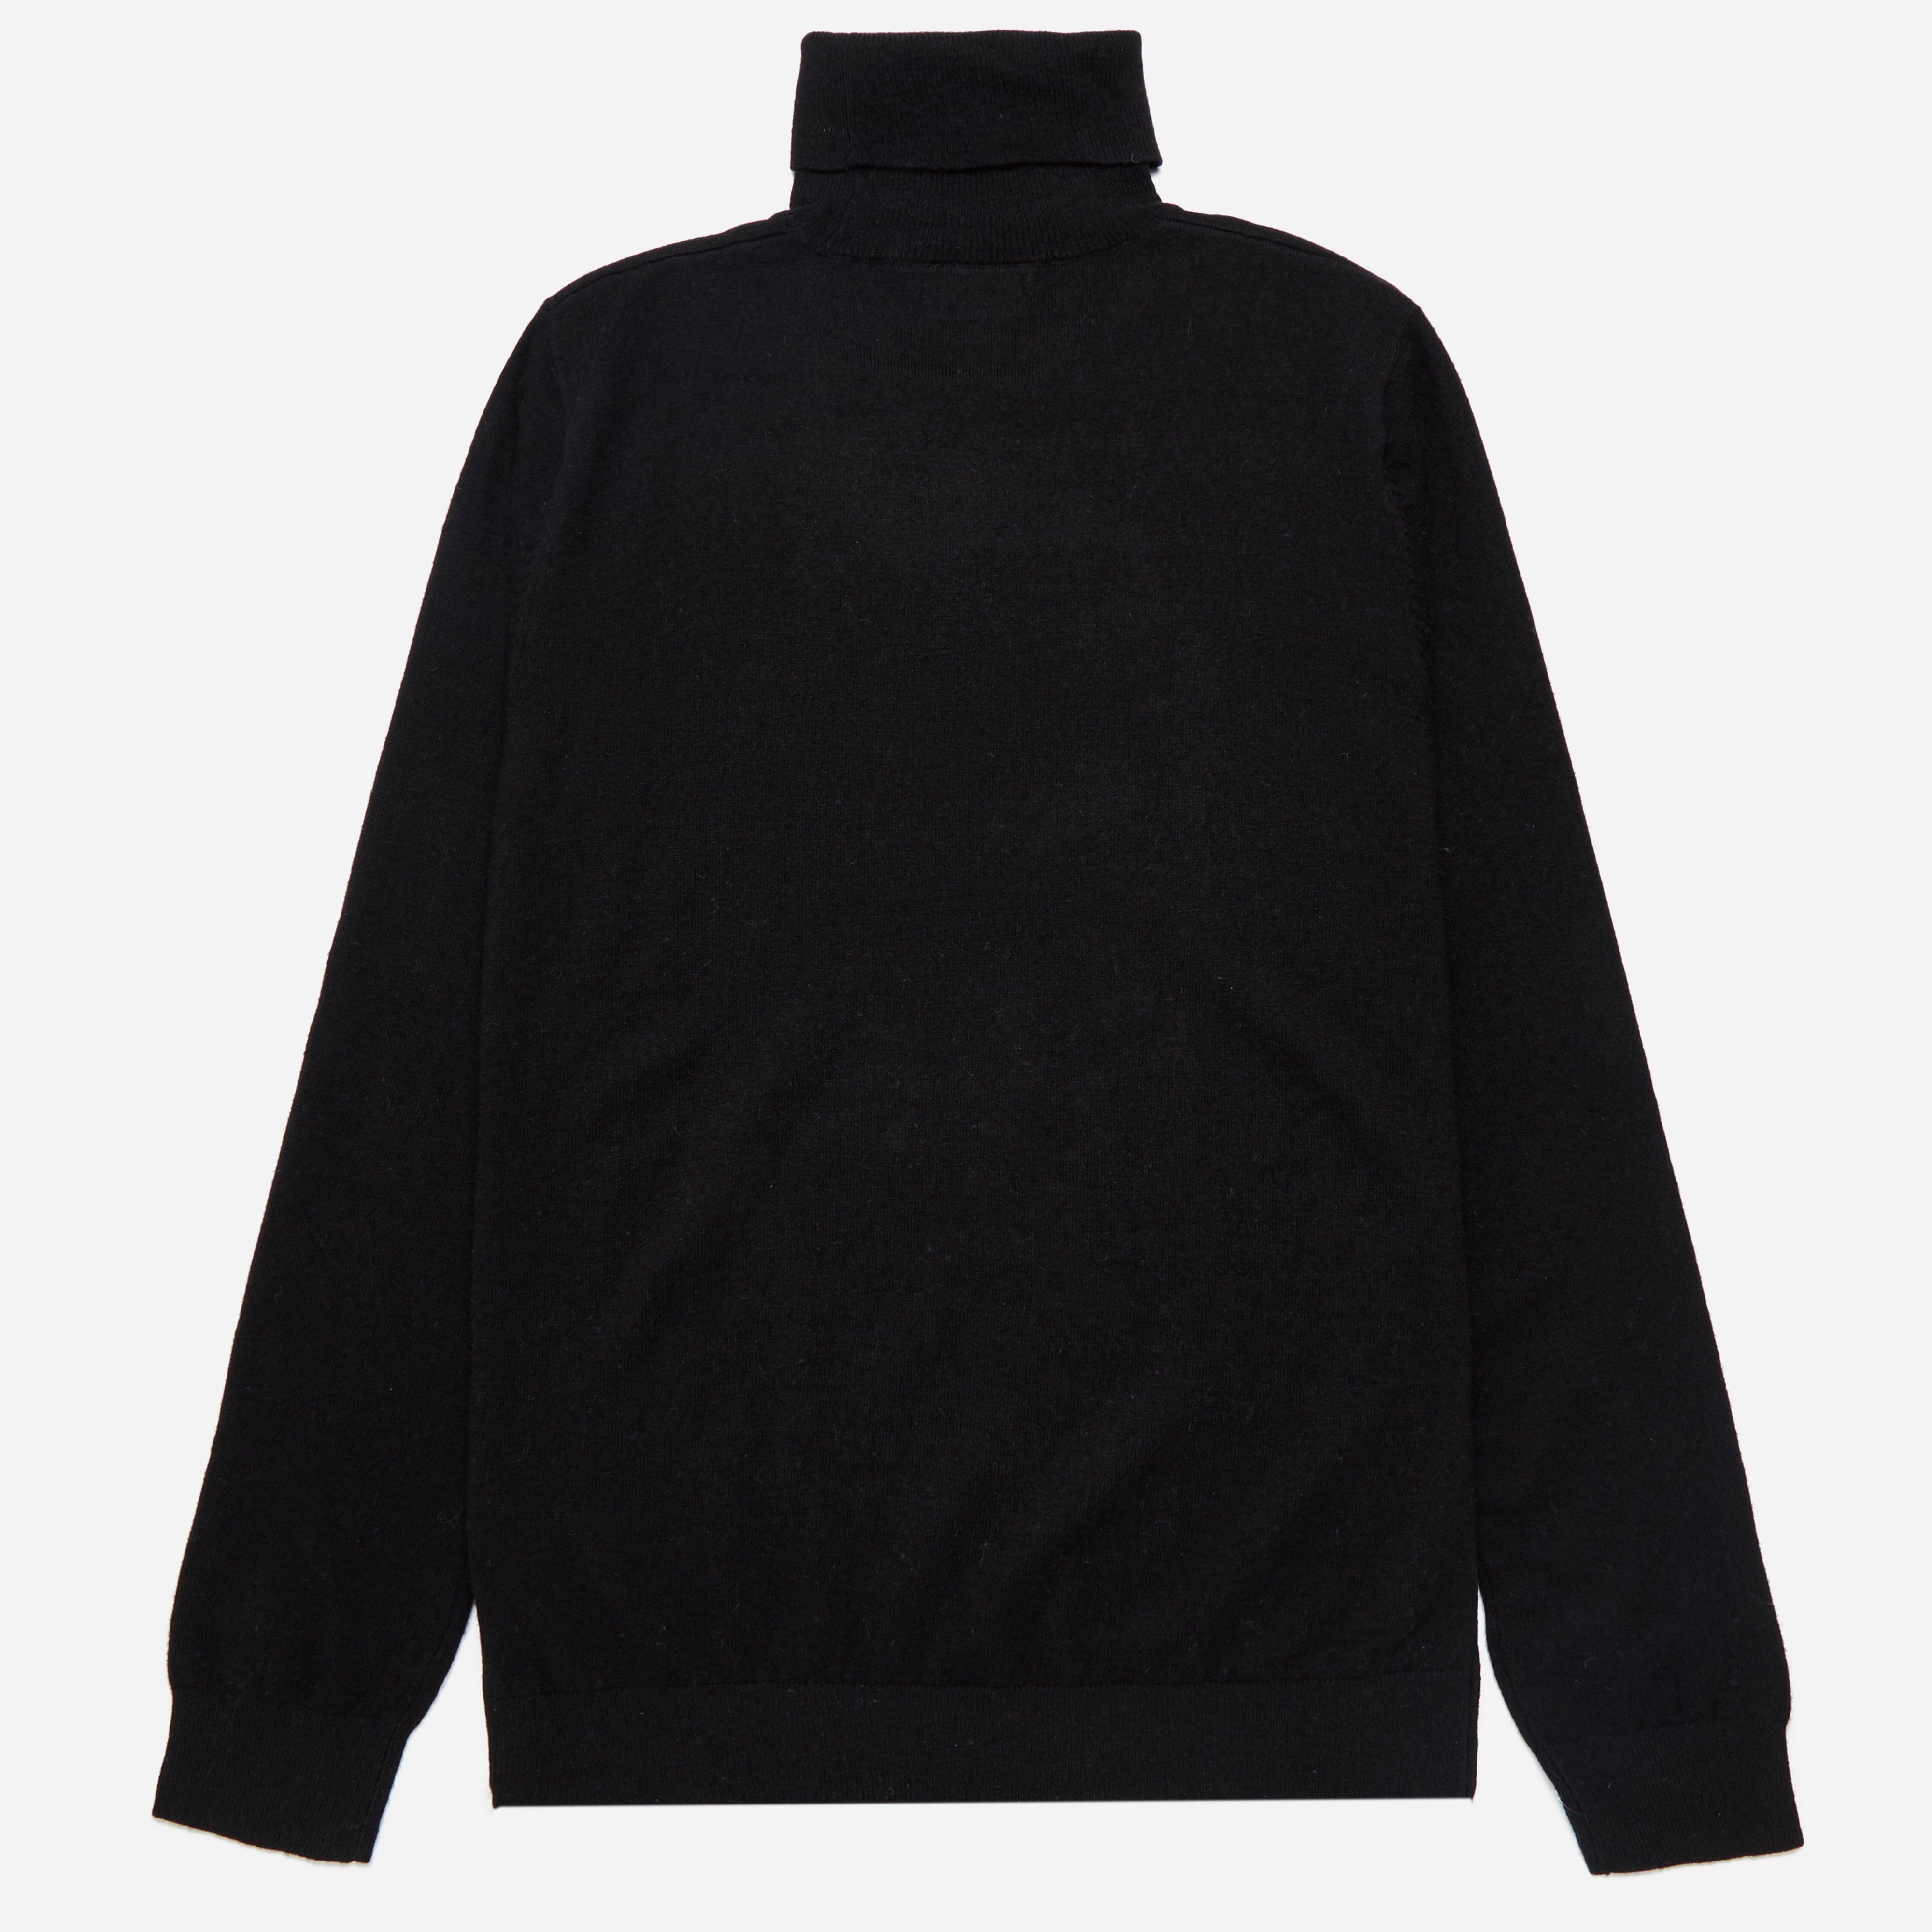 Carhartt WIP Carhartt Playoff Turtleneck Sweatshirt in Black for Men - Lyst